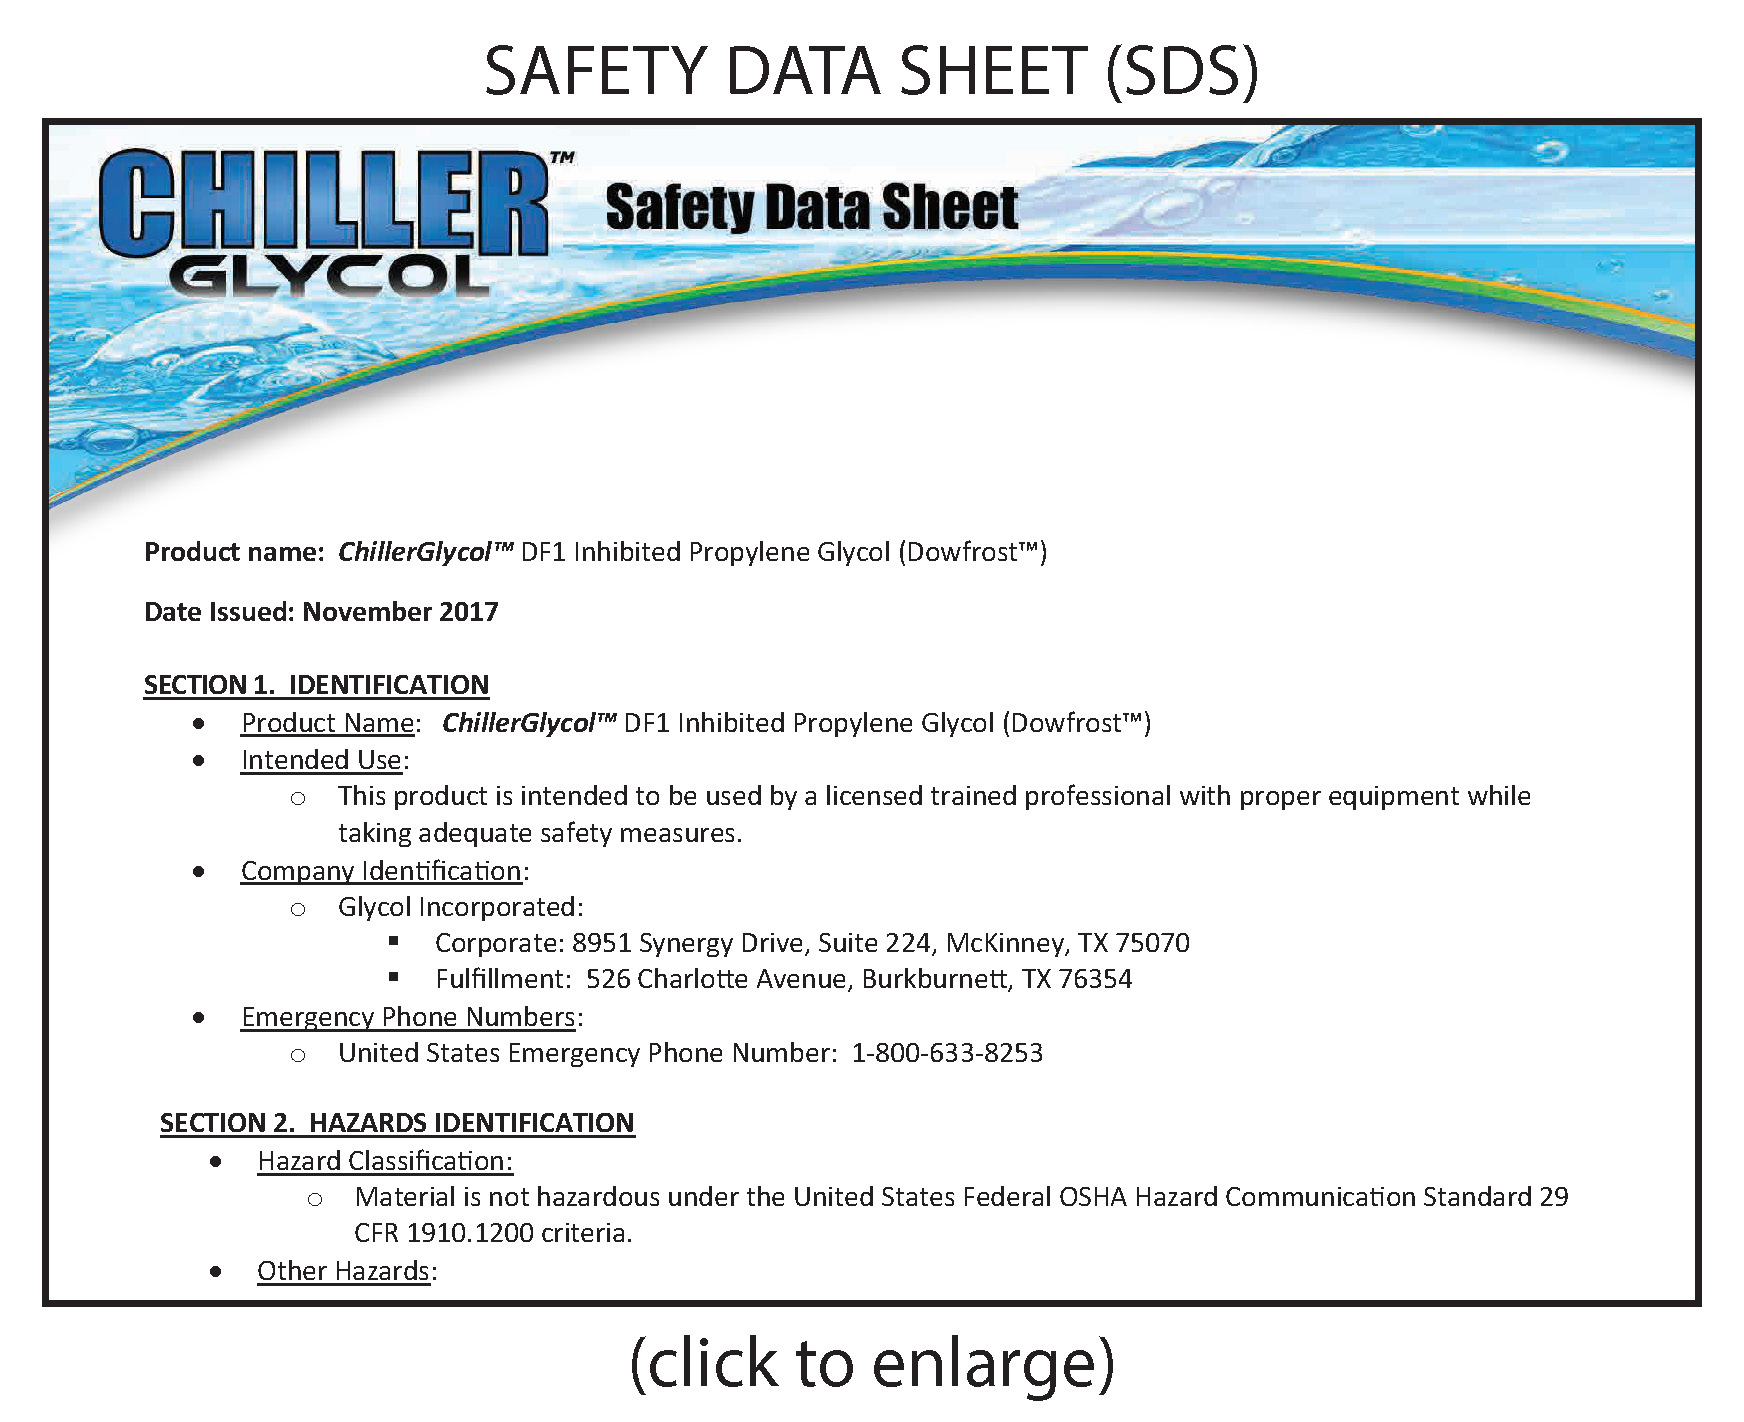 chiller-glycol-safety-data-sheet